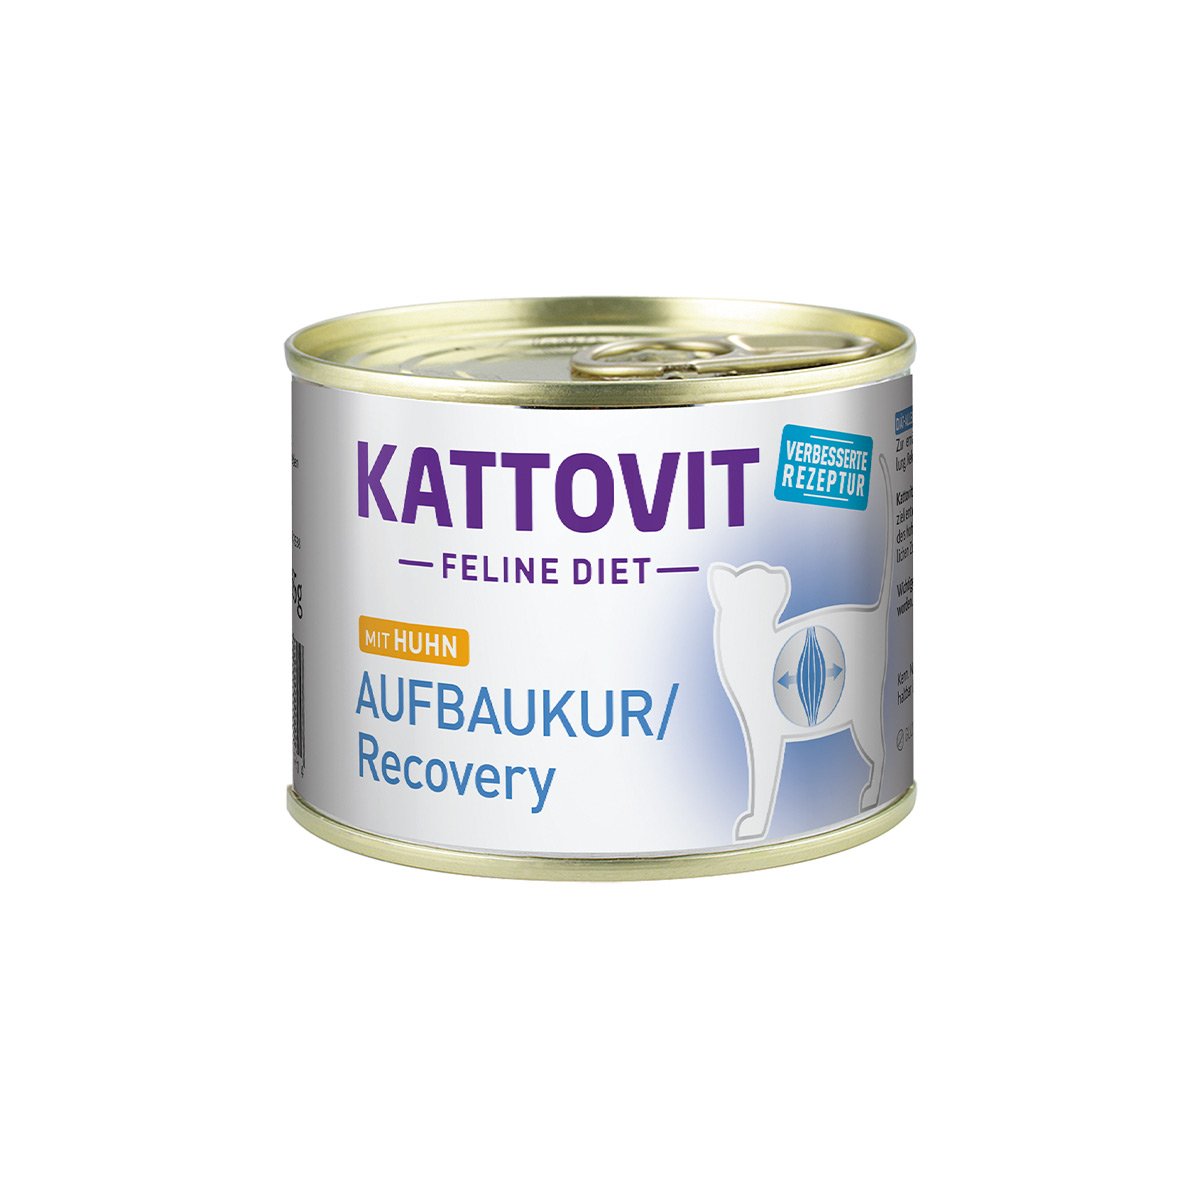 Kattovit Feline Diet Aufbaukur/Recovery Huhn 12x185g von Kattovit